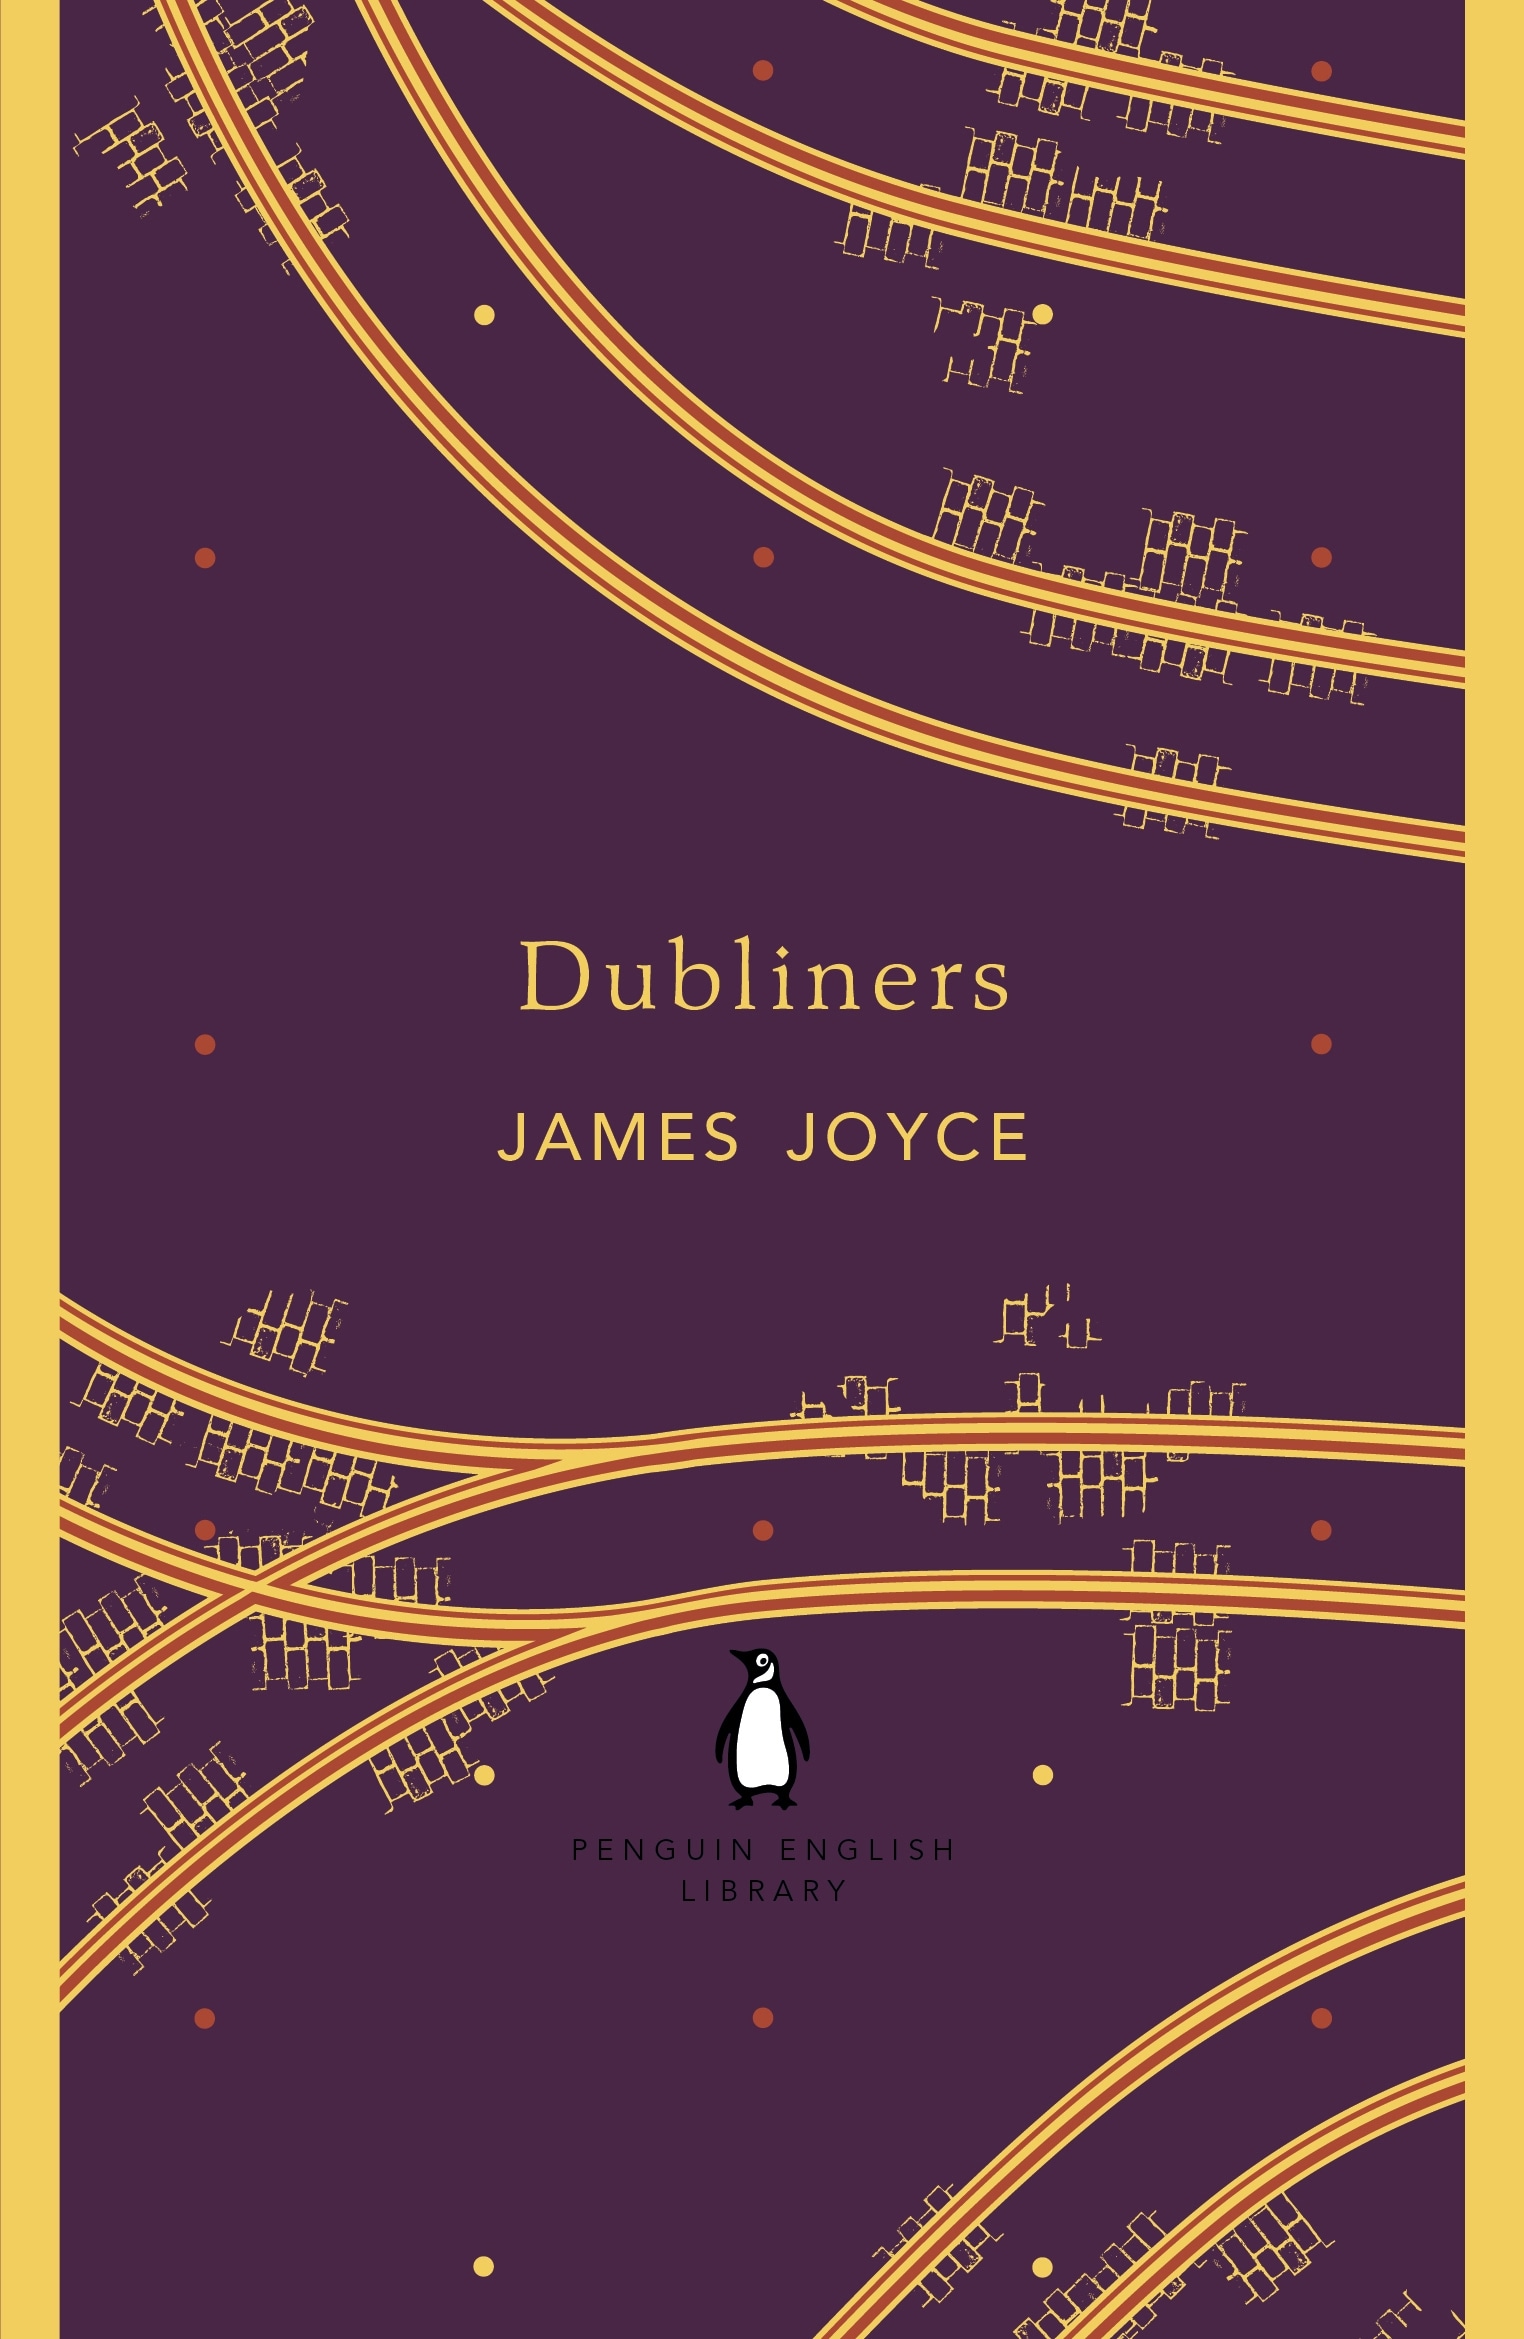 Book “Dubliners” by James Joyce — July 26, 2012